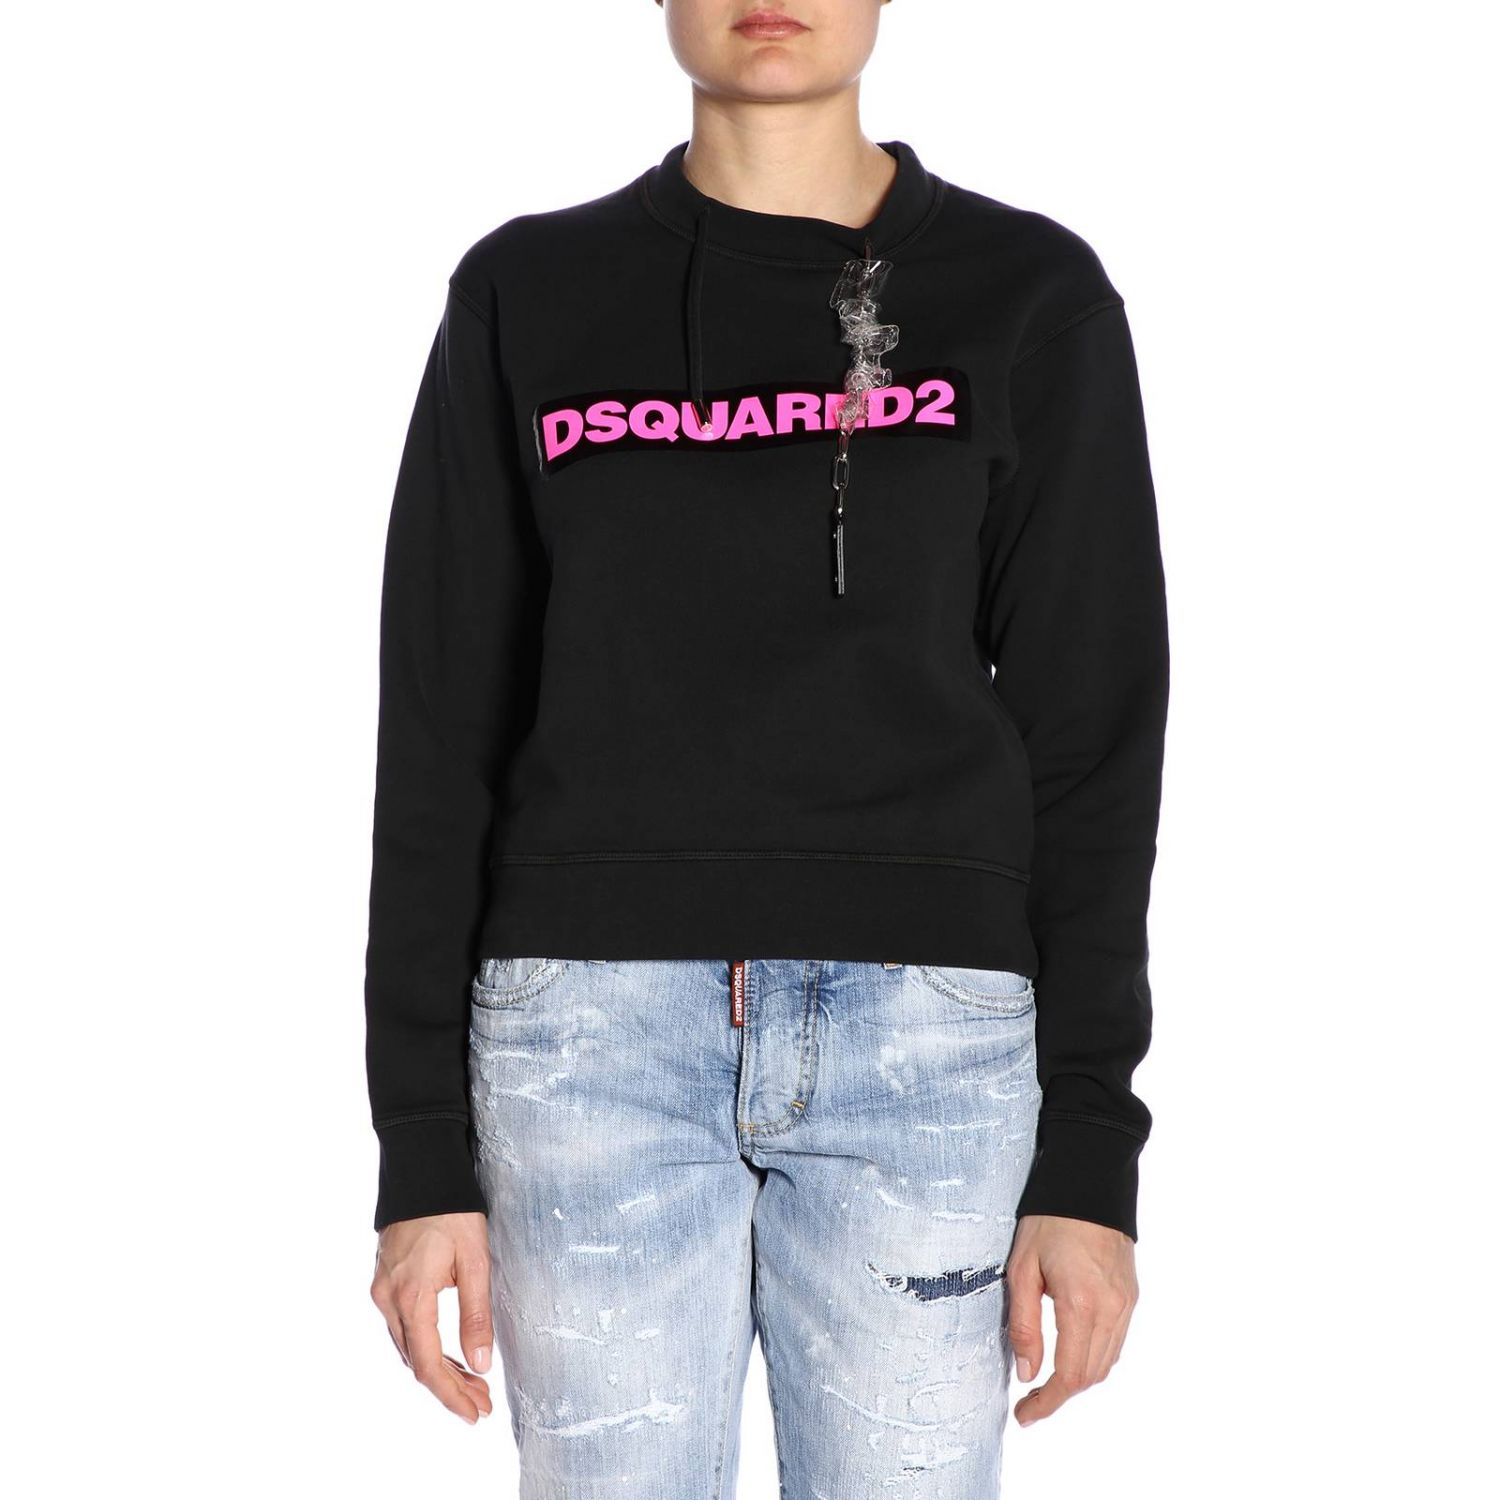 dsquared sweatshirt for sale